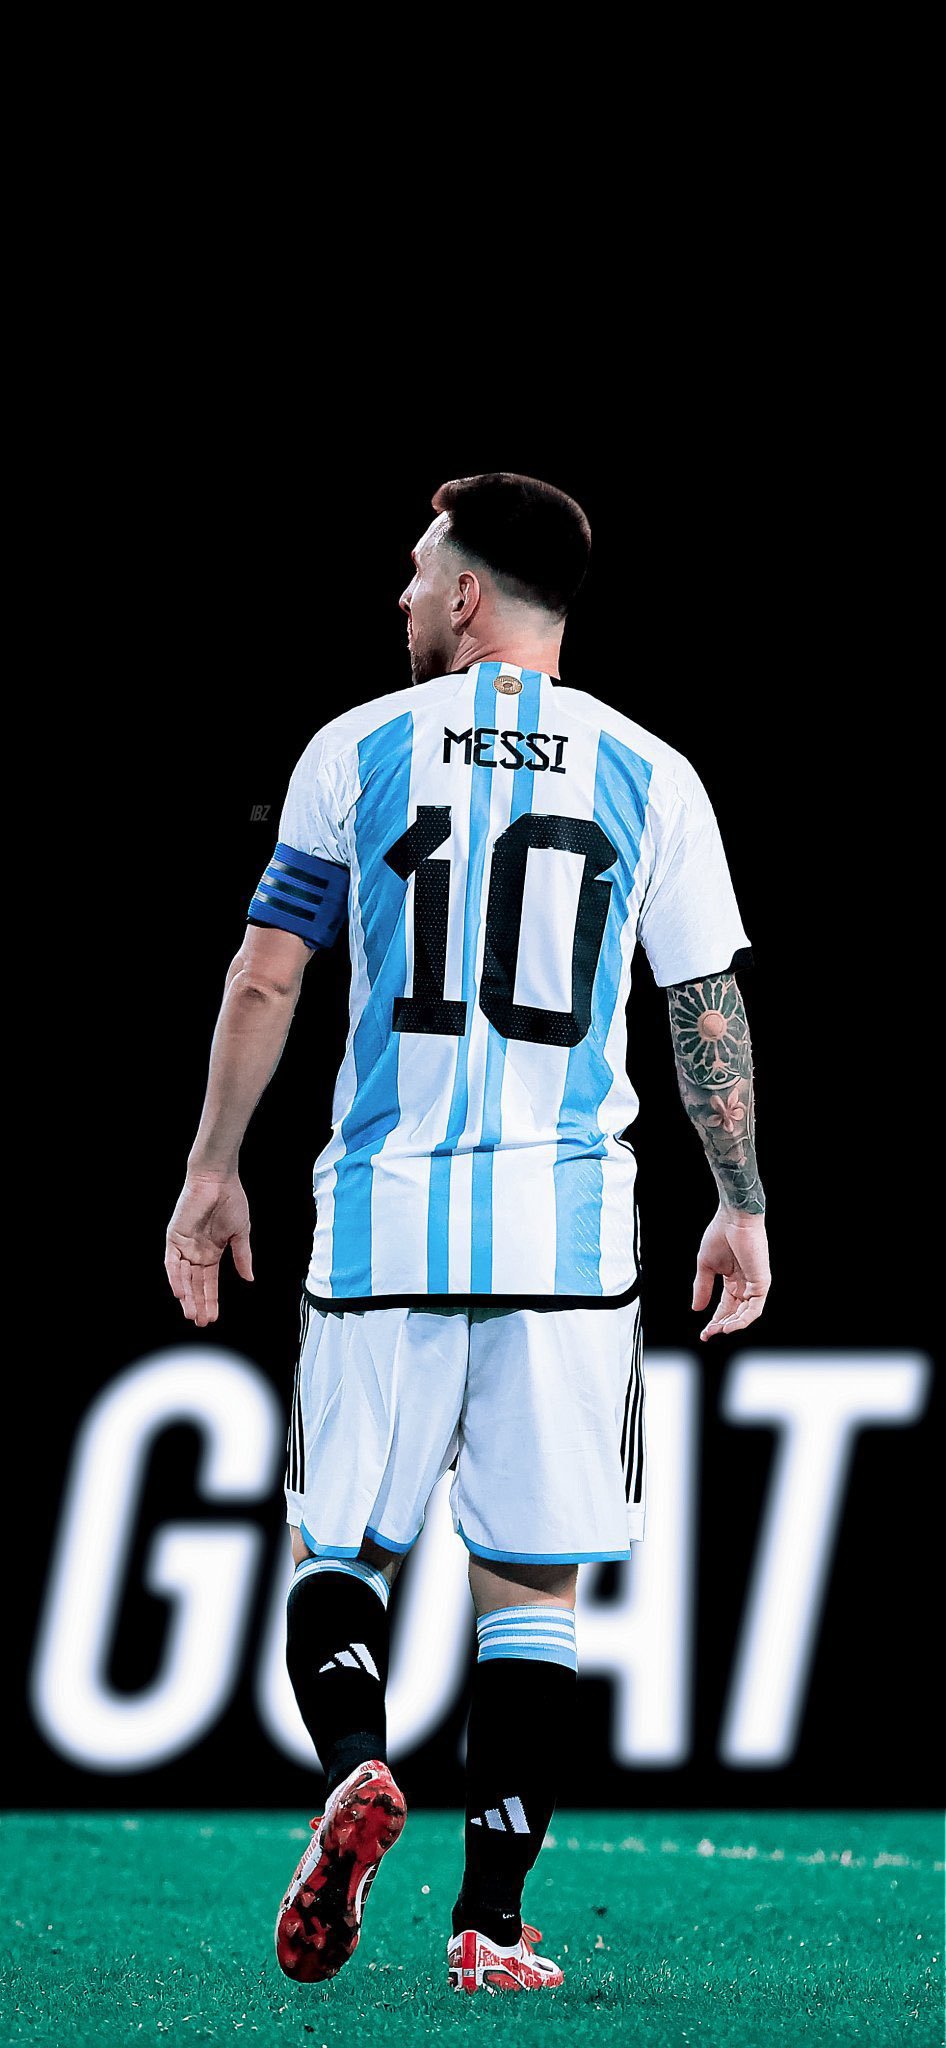 50 Messi World Cup Wallpapers  WallpaperSafari